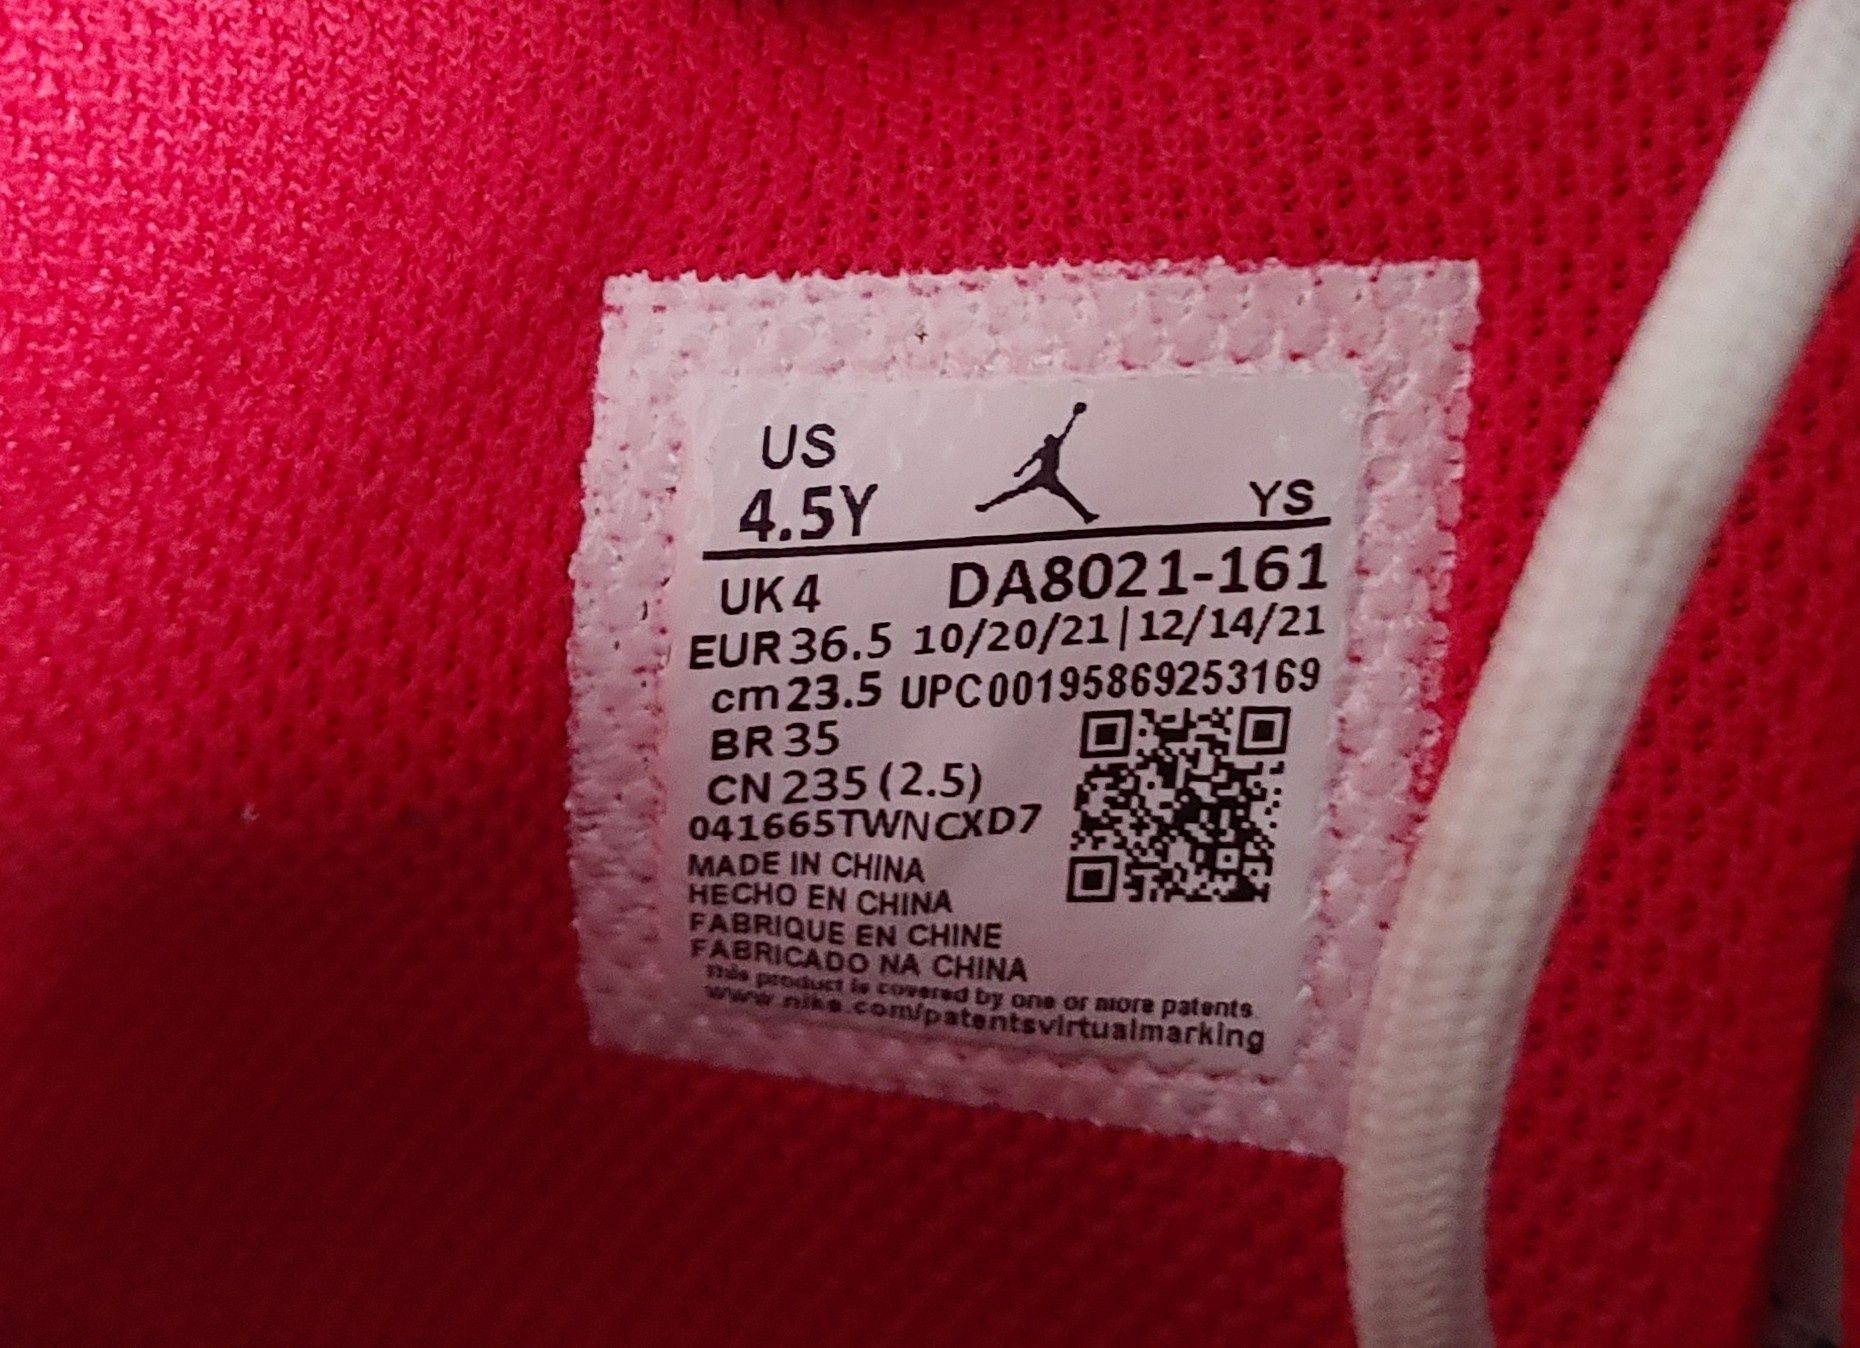 Кроссовки Nike Jordan max aura 3